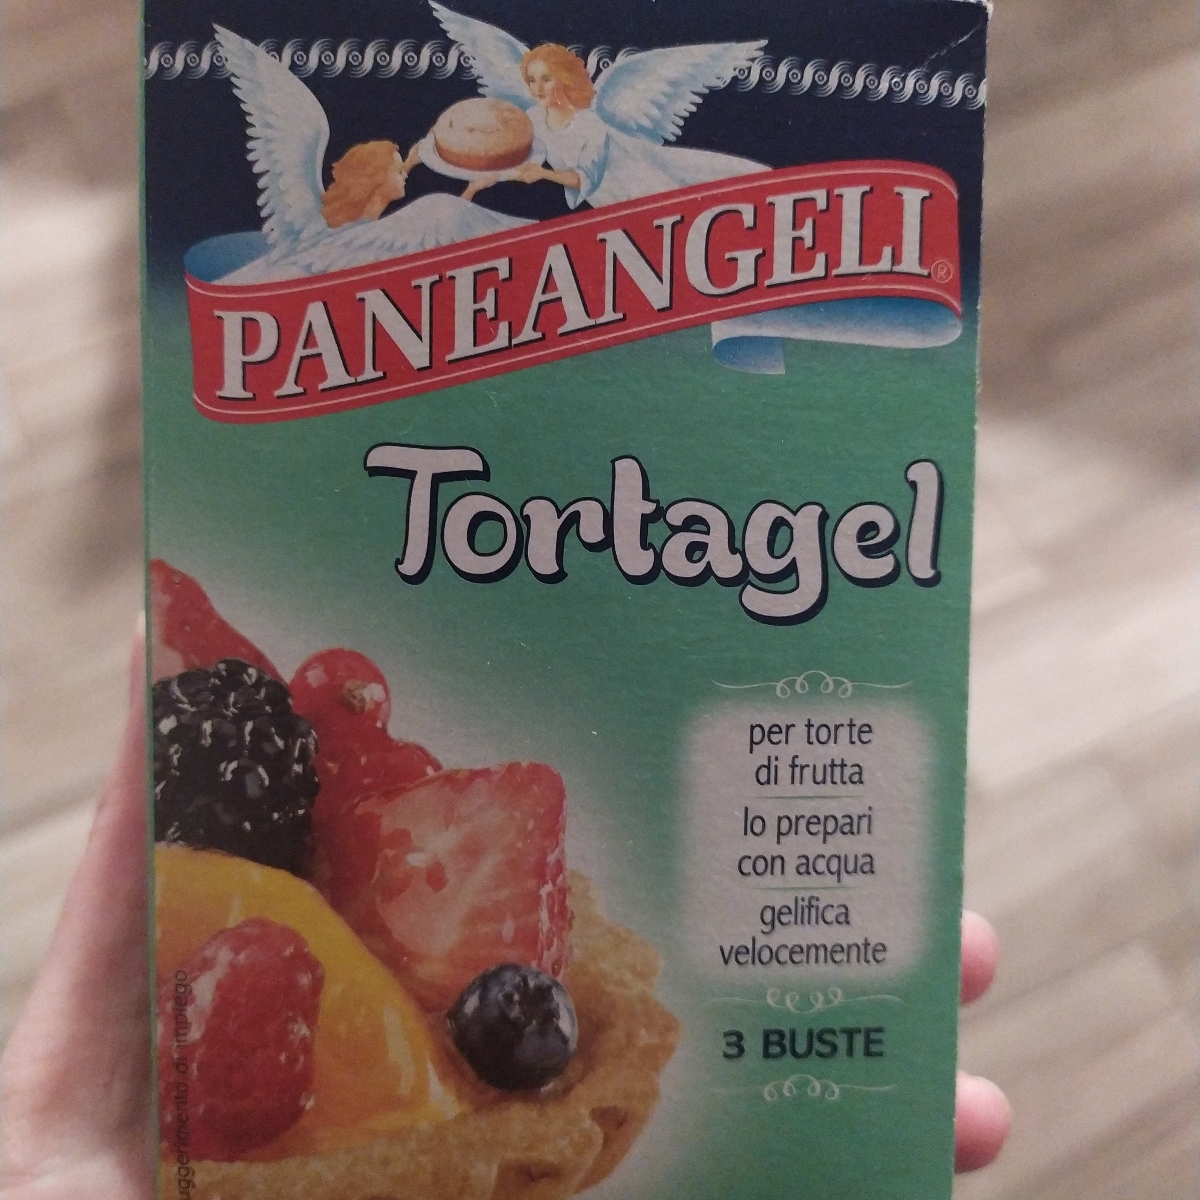 Paneangeli Tortagel Reviews | abillion